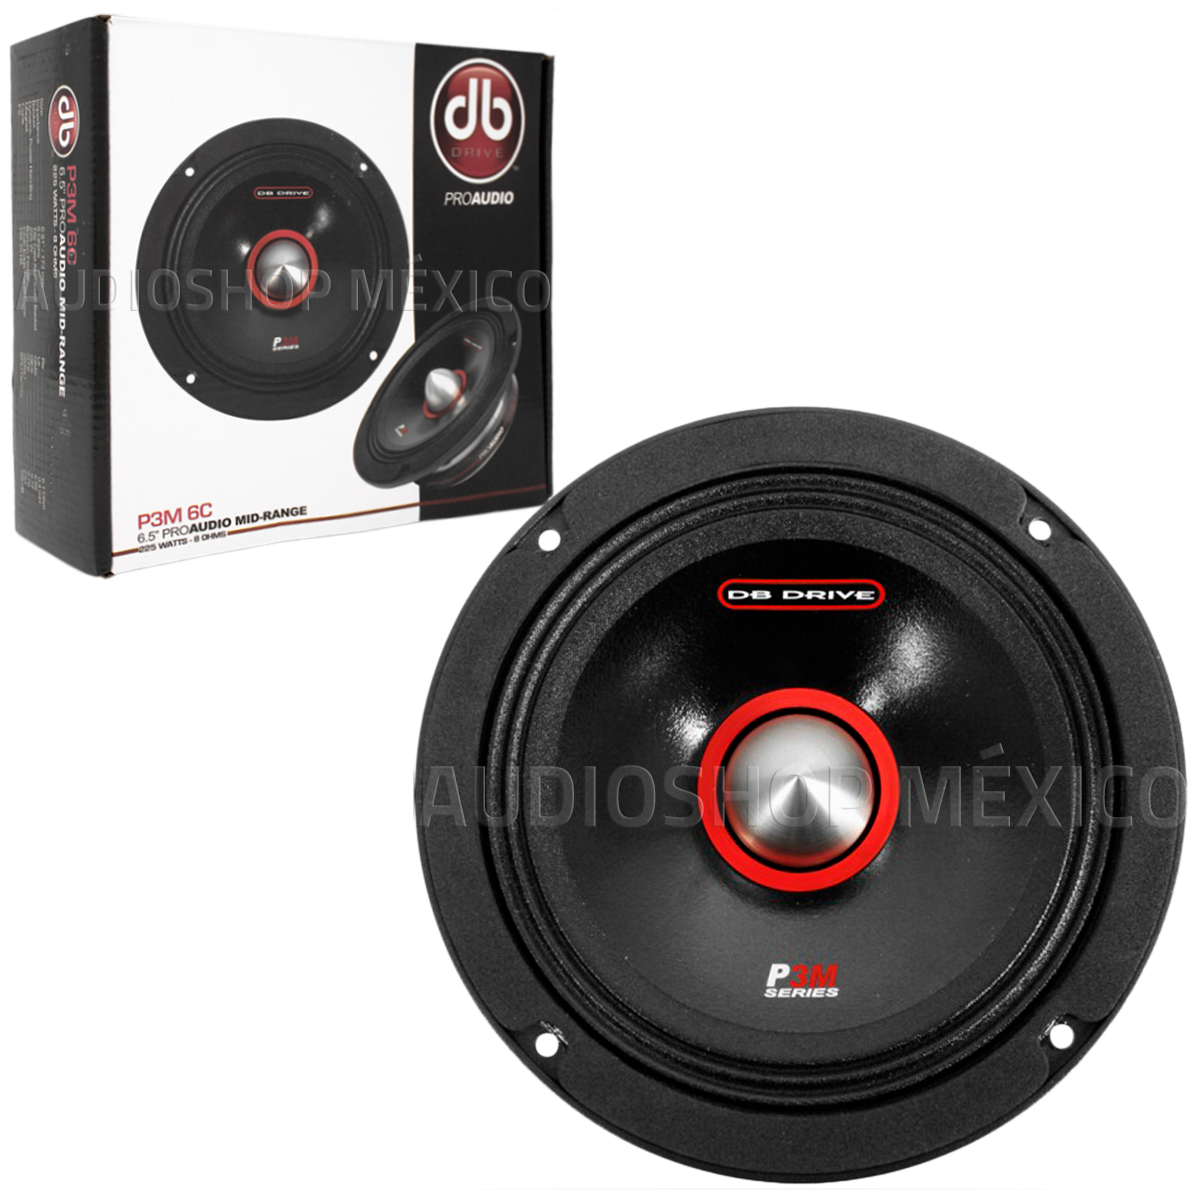 Medio Rango DB Drive P3M 6C 225 Watts 6.5 Pulgadas 8 Ohms PRO Audio Series (Venta individual)